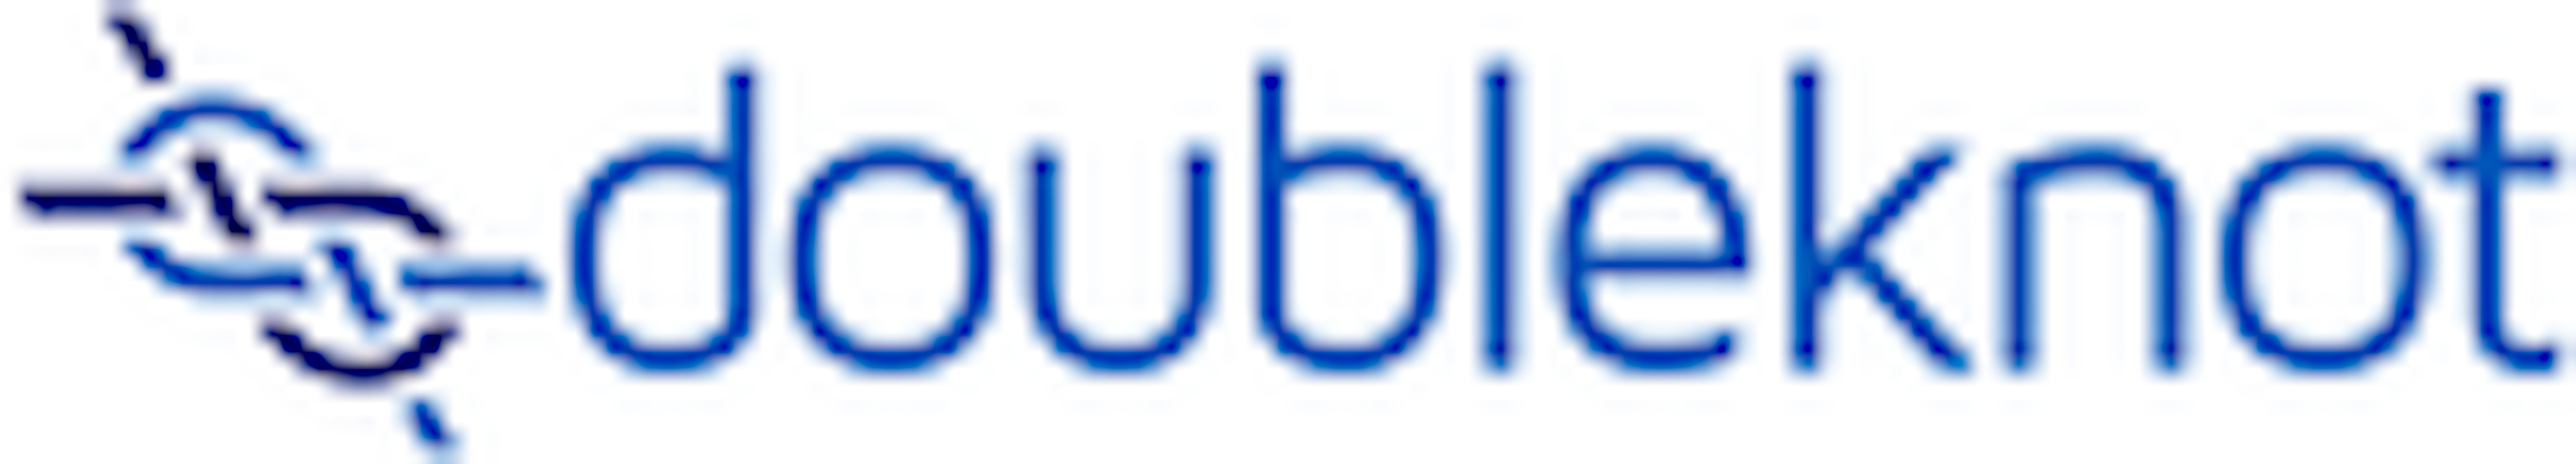 Doubleknot Logo